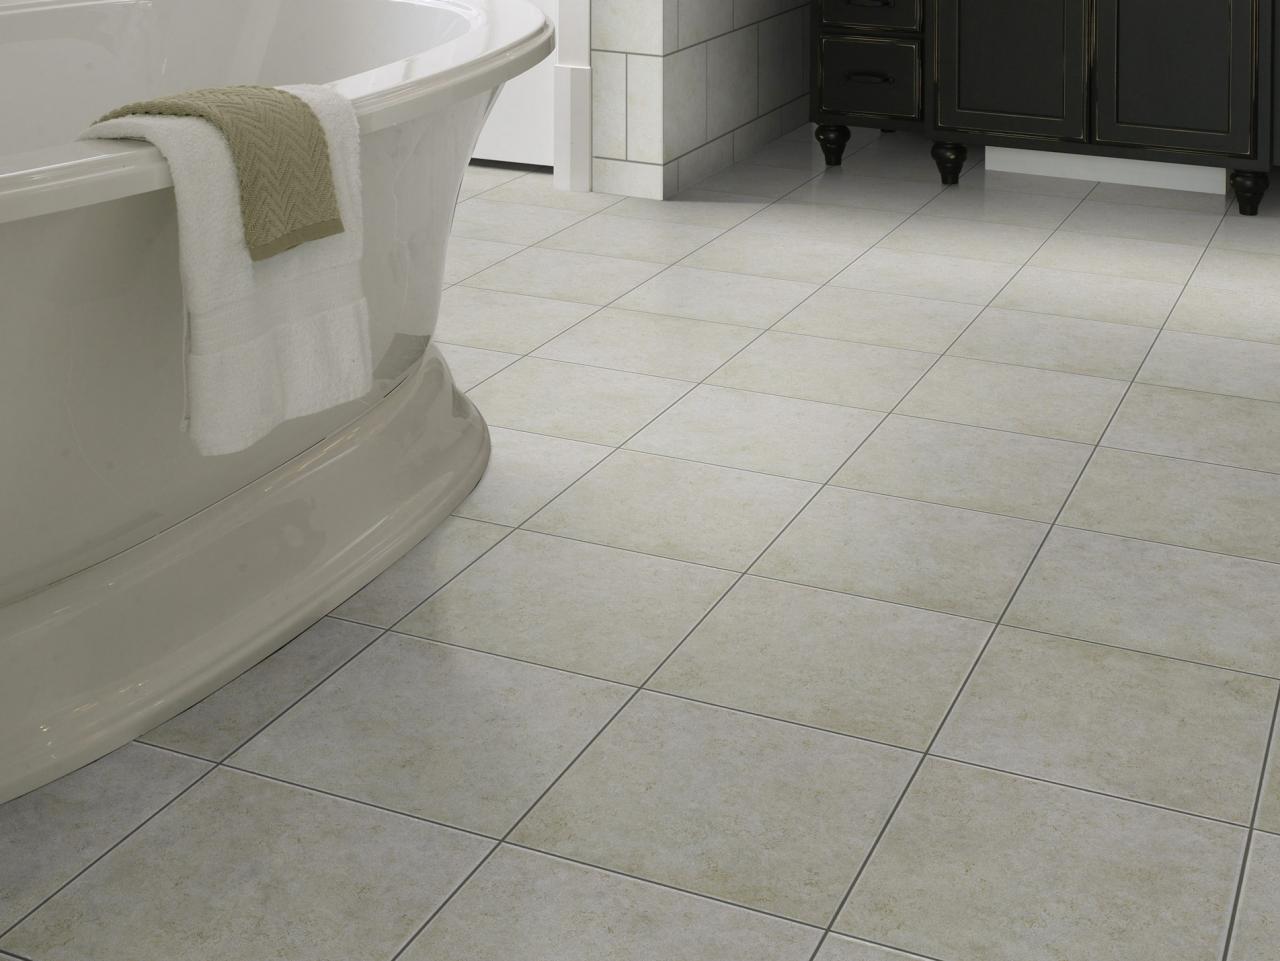 Why Homeowners Love Ceramic Tile, Tiling Bathroom Floor Cost